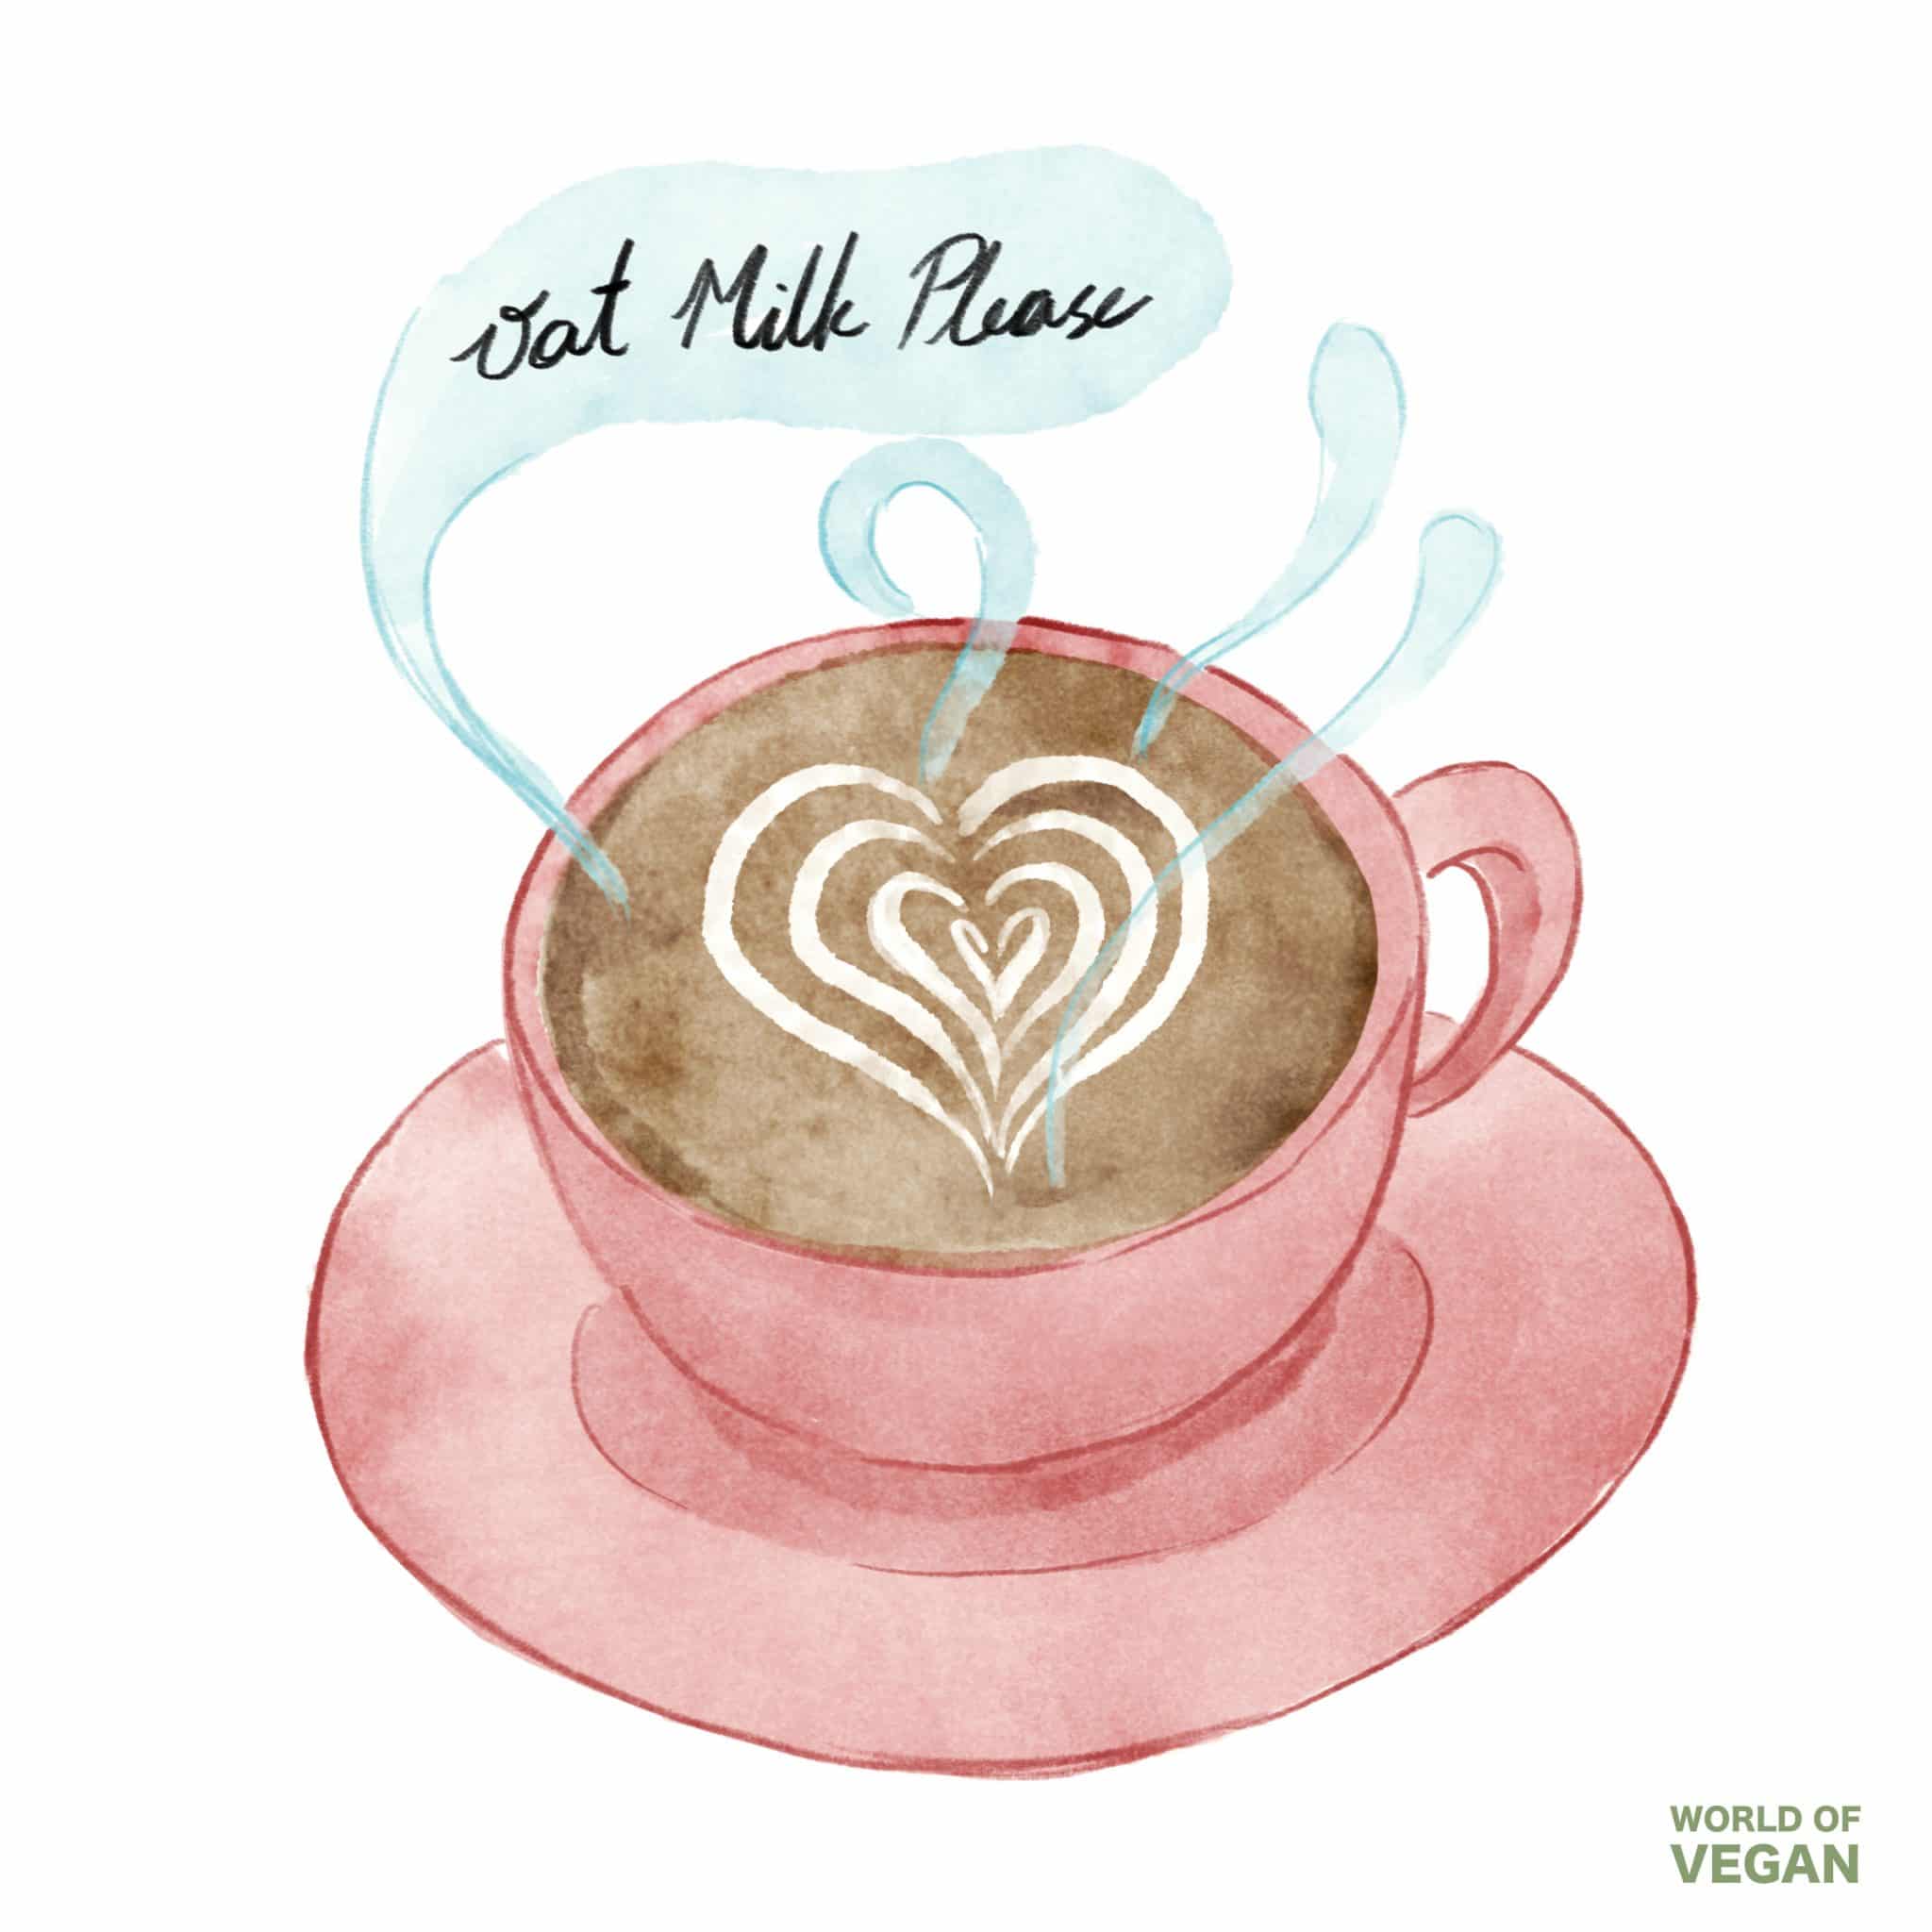 Vegan art illustration of an oat milk latte in a pink coffee mug with a heart in the foam. 